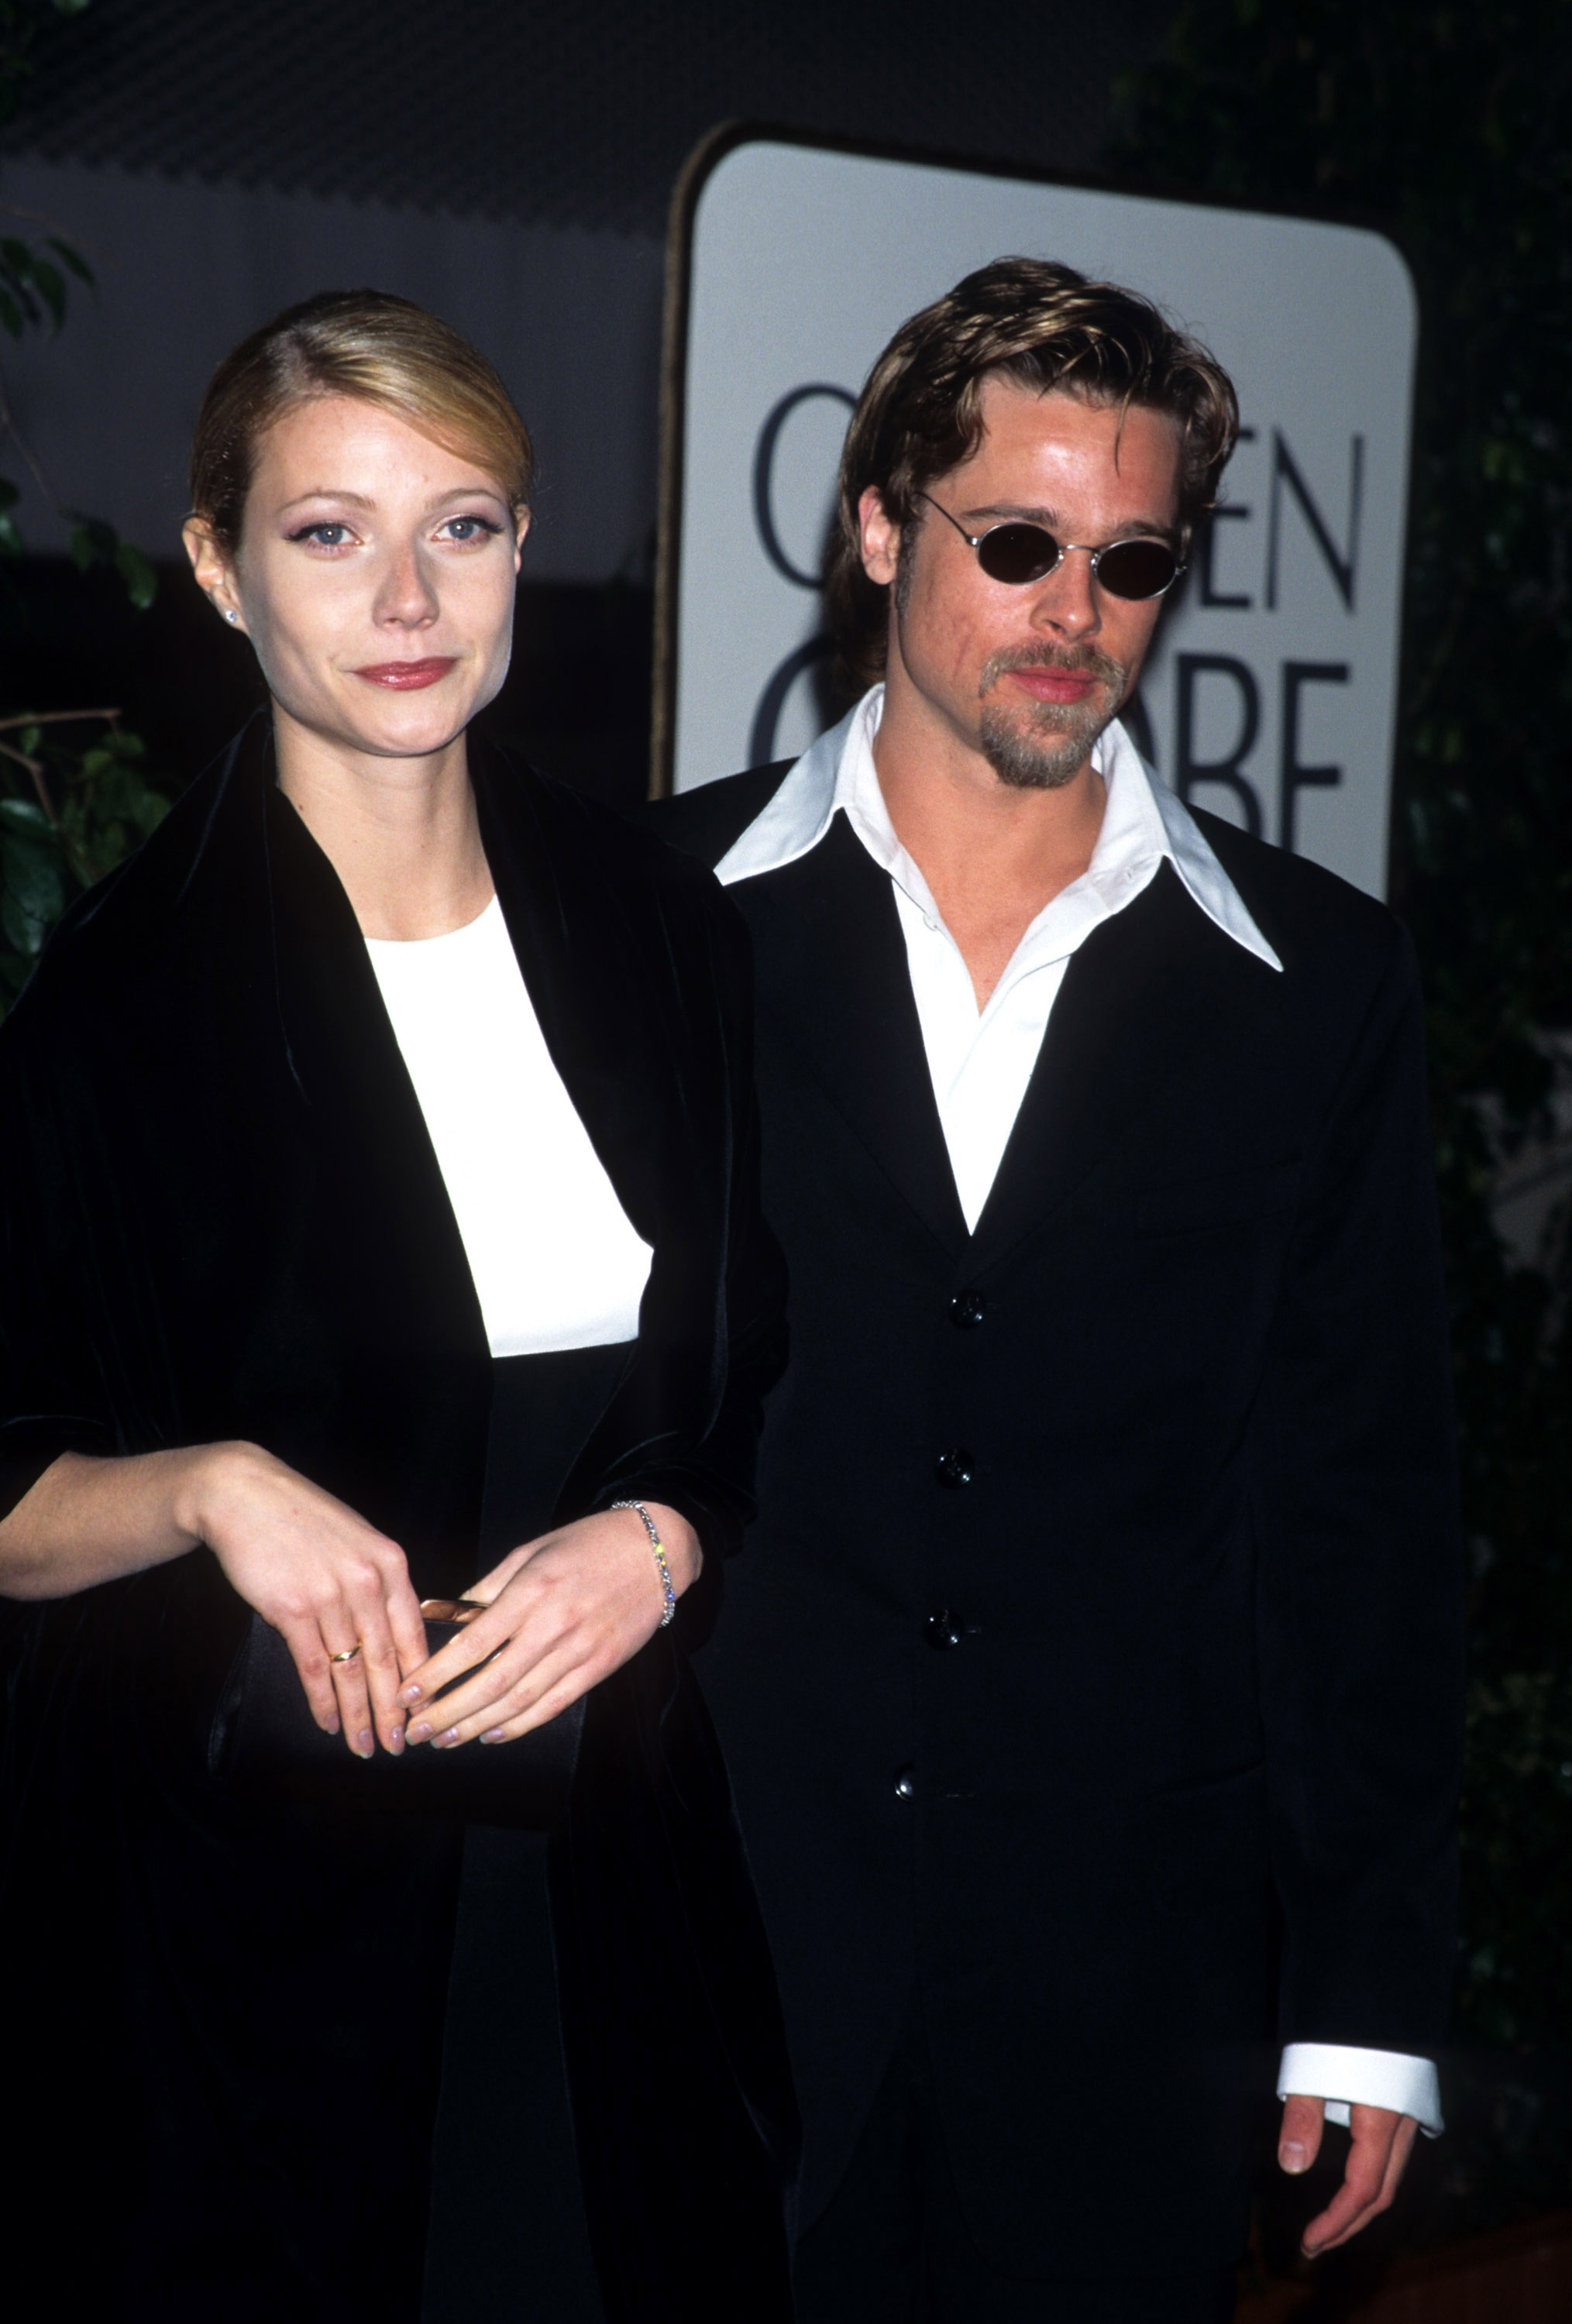 Gwyneth Paltrow et Brad Pitt aux Golden Globe Awards à Beverly Hills, Californie, le 23 janvier 1996 | Source : Getty Images